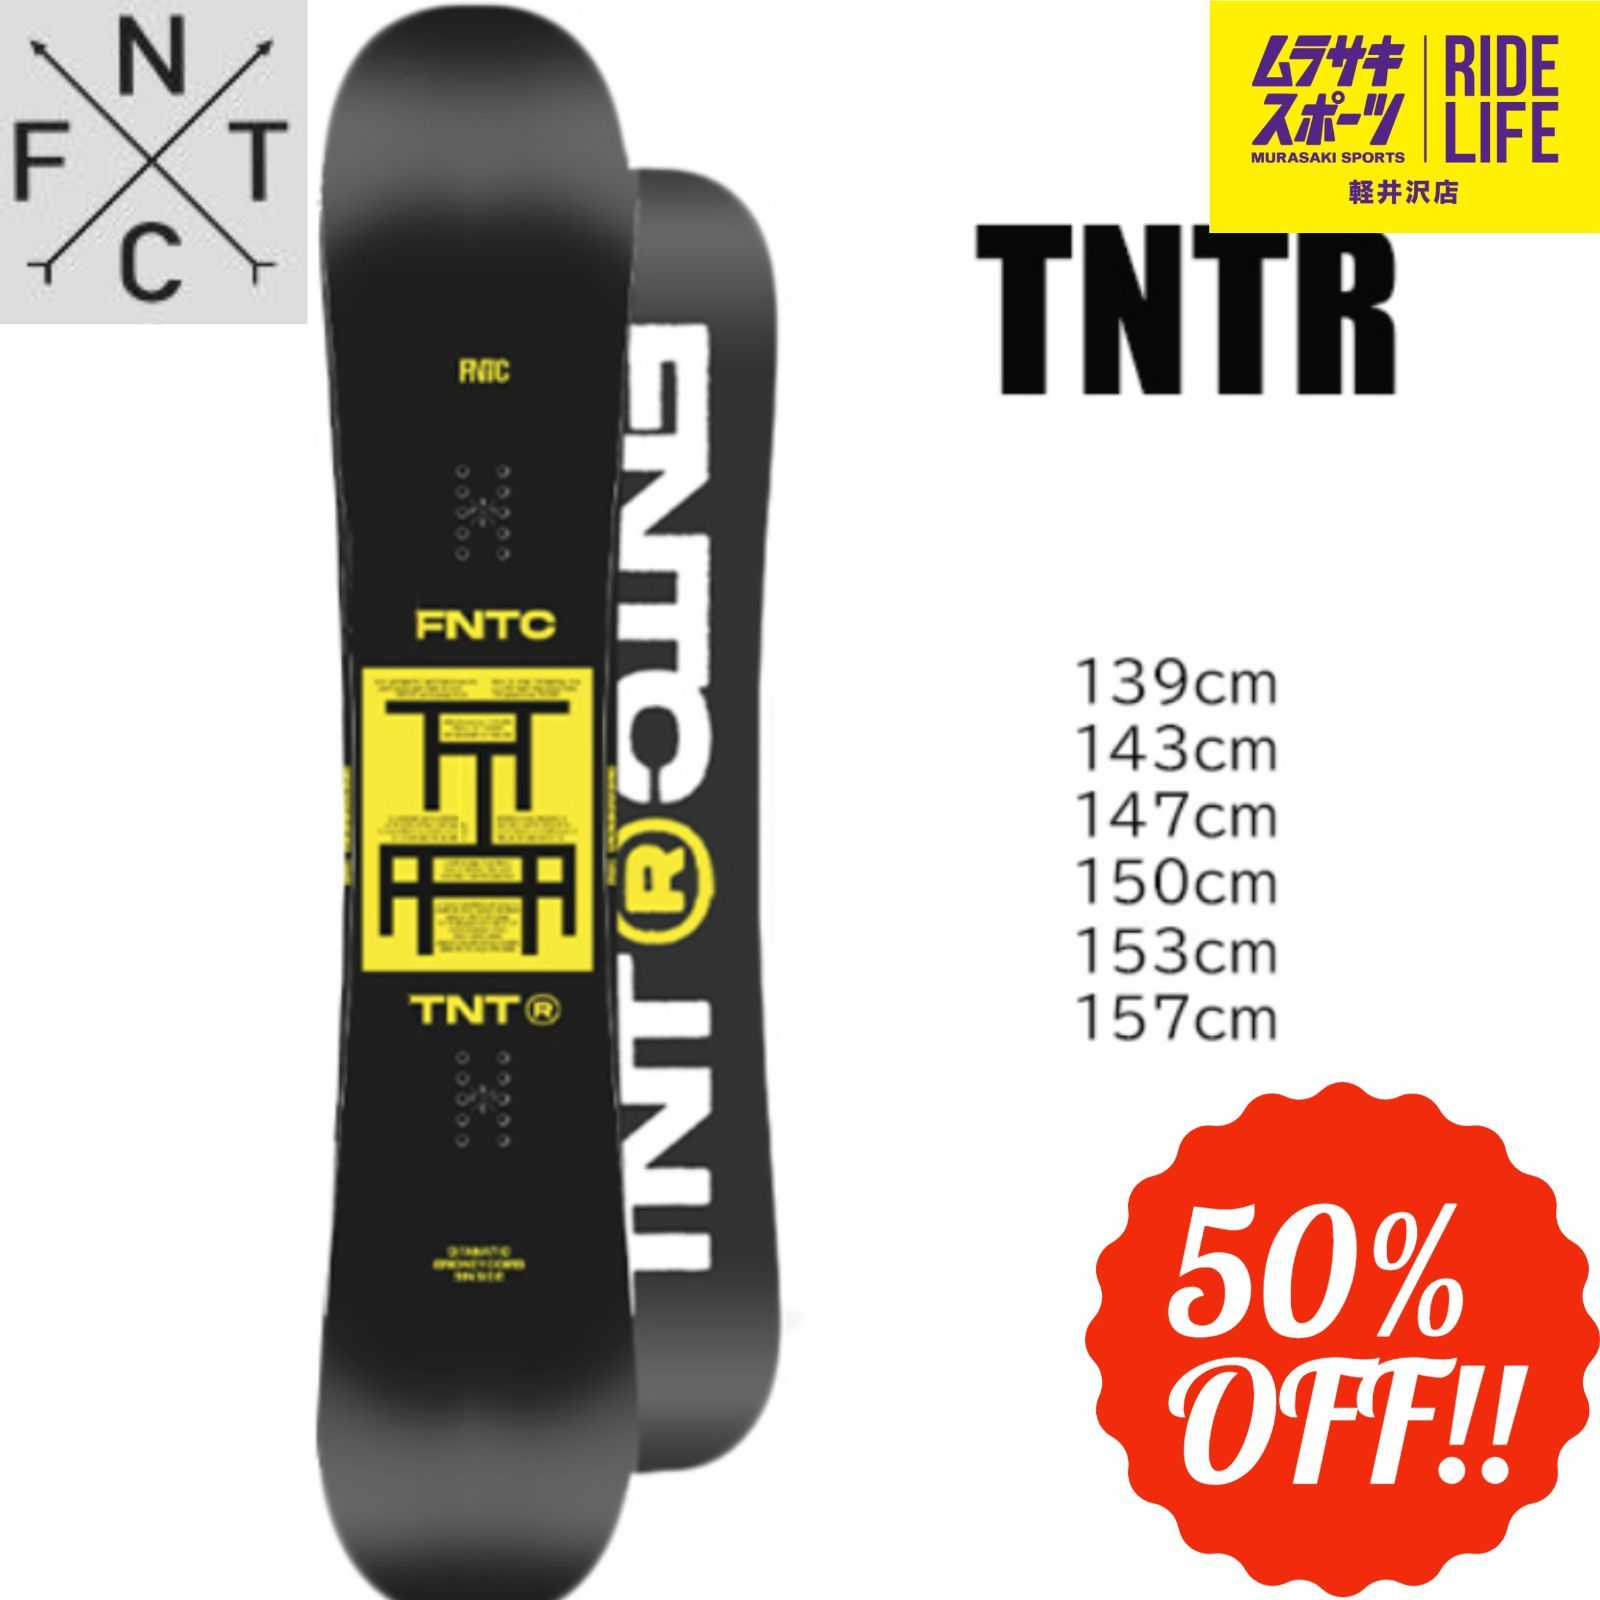 FNTC TNT 143cm スノーボード グラトリ | hartwellspremium.com